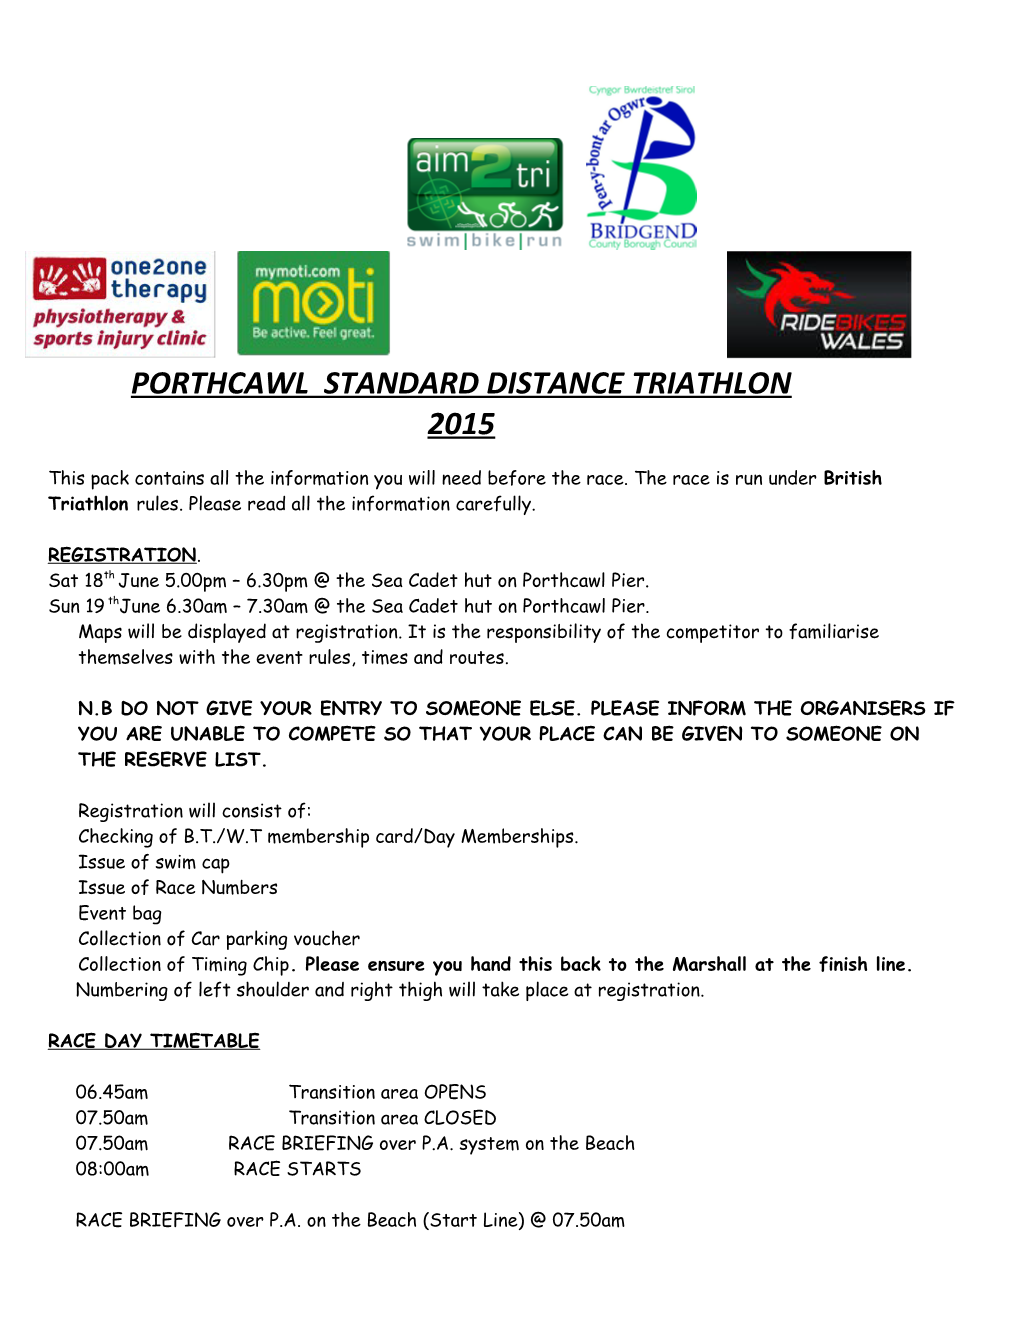 Porthcawl Standard Distance Triathlon